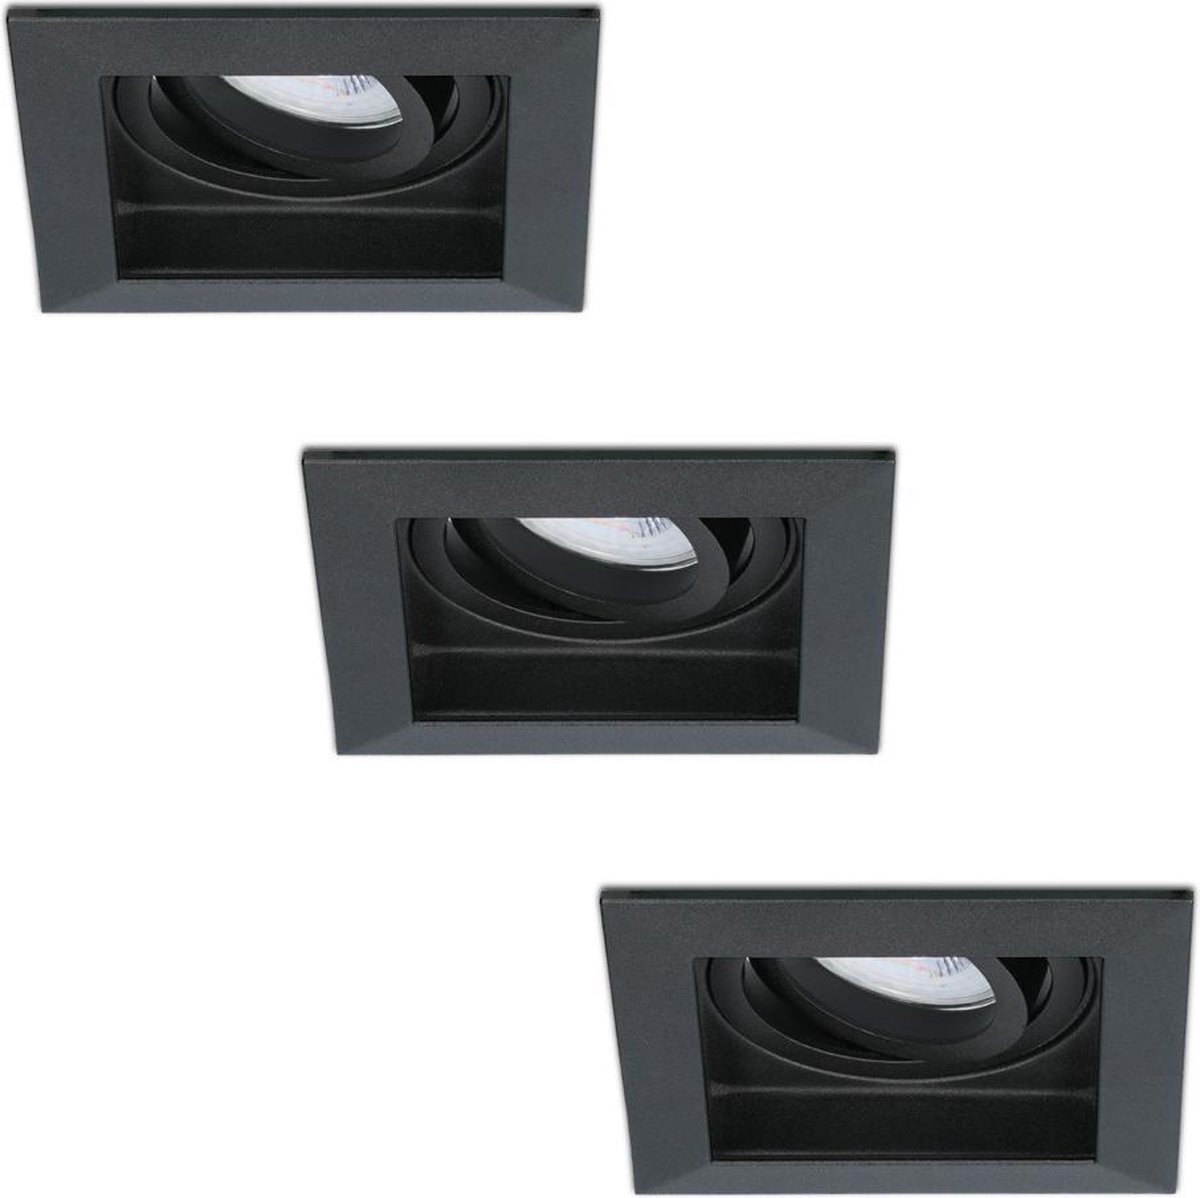 HOFTRONIC 3x Durham - Vierkante inbouwspot - LED - Zaagmaat 85x85mm - Zwart - Dimbaar - Kantelbaar - 5 Watt - 350 lumen - 230V - 4000K Neutraal warm wit - Verwisselbare GU10 - Plafondspots - Inbouwspot voor binnen -